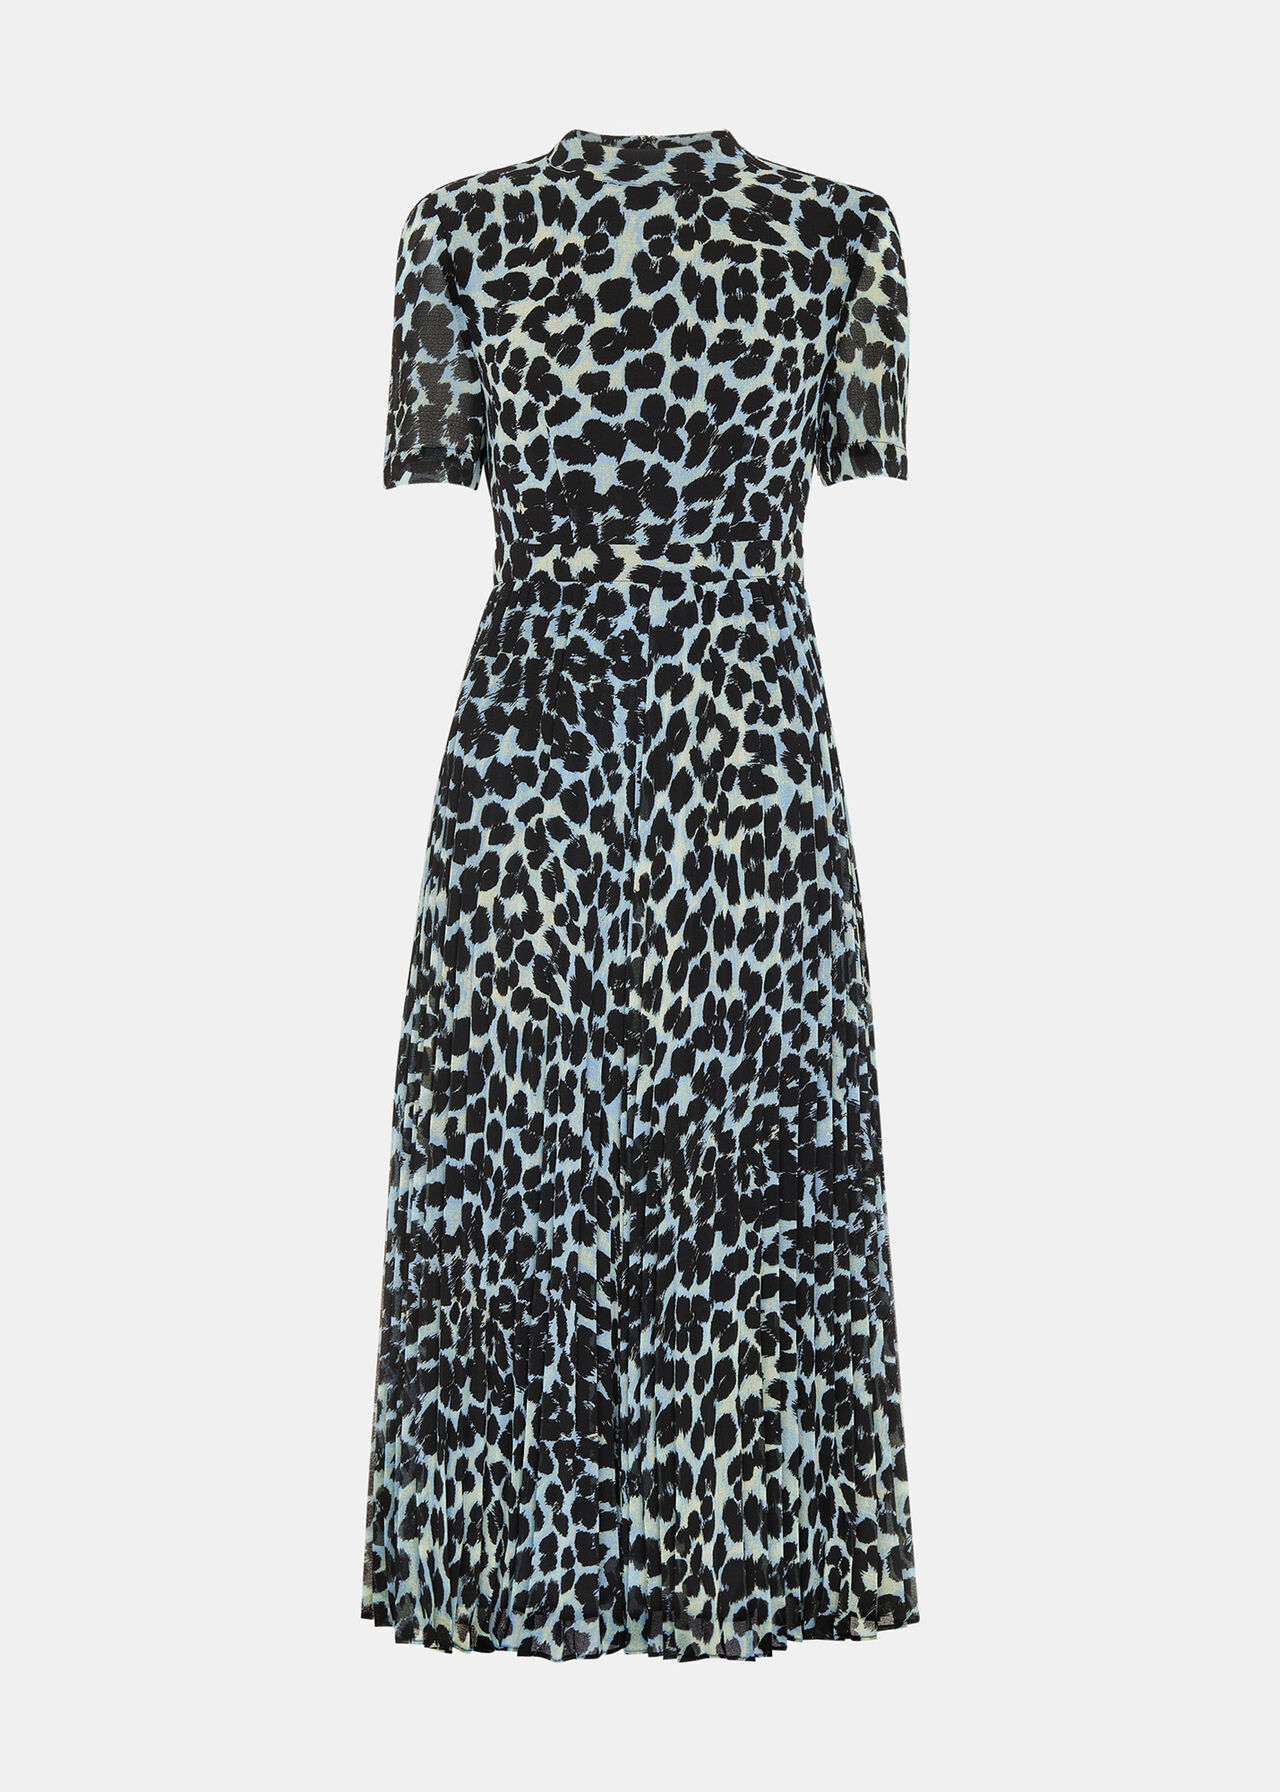 Leopard Spot Cut Out Dress